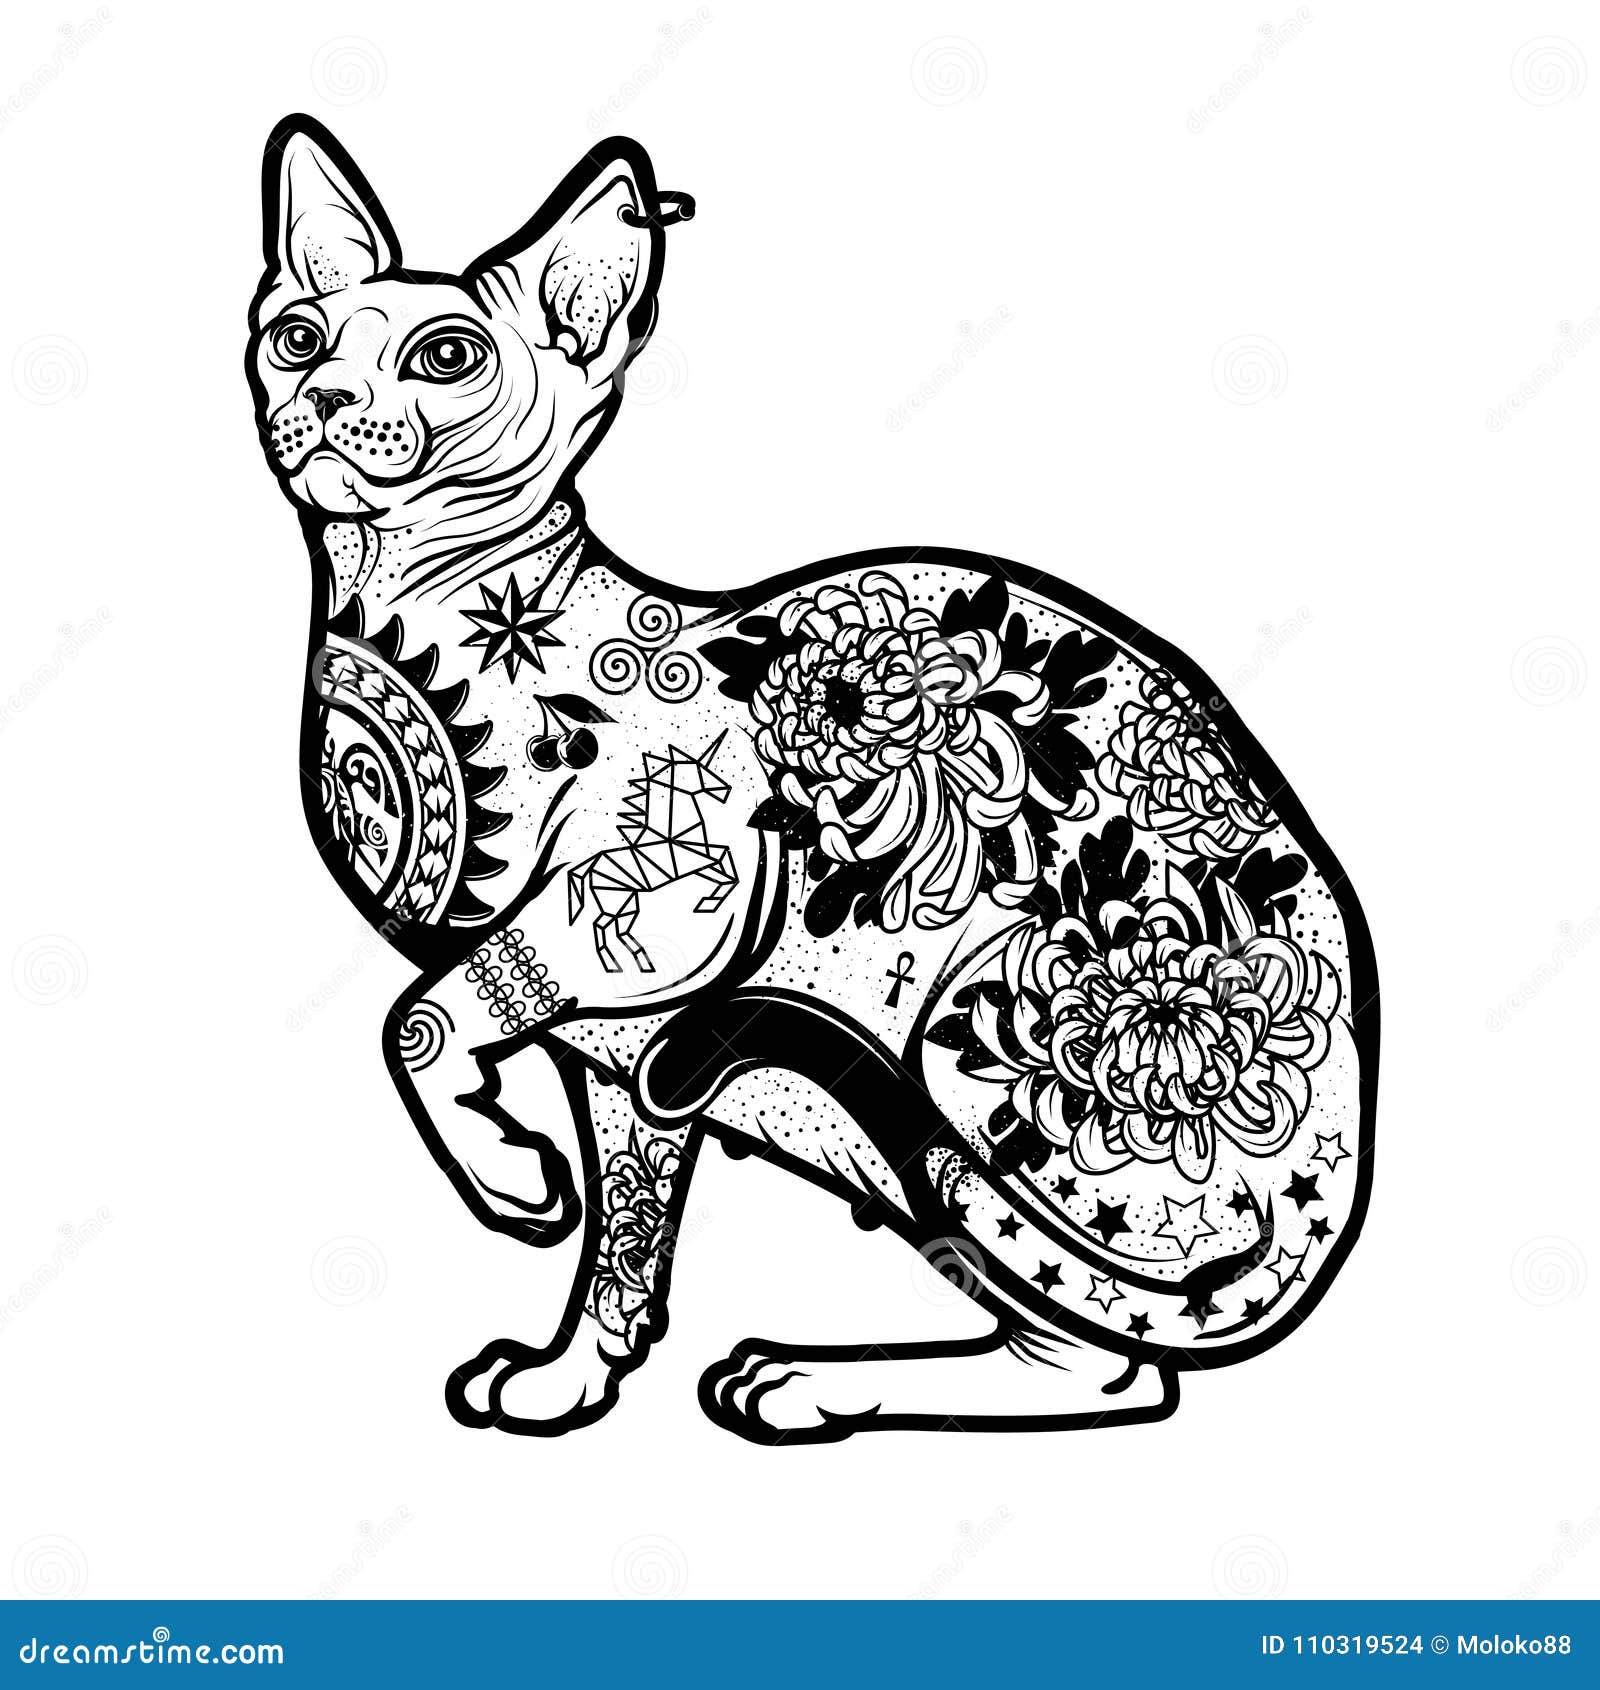 Outline kitty tattoo - Tattoogrid.net